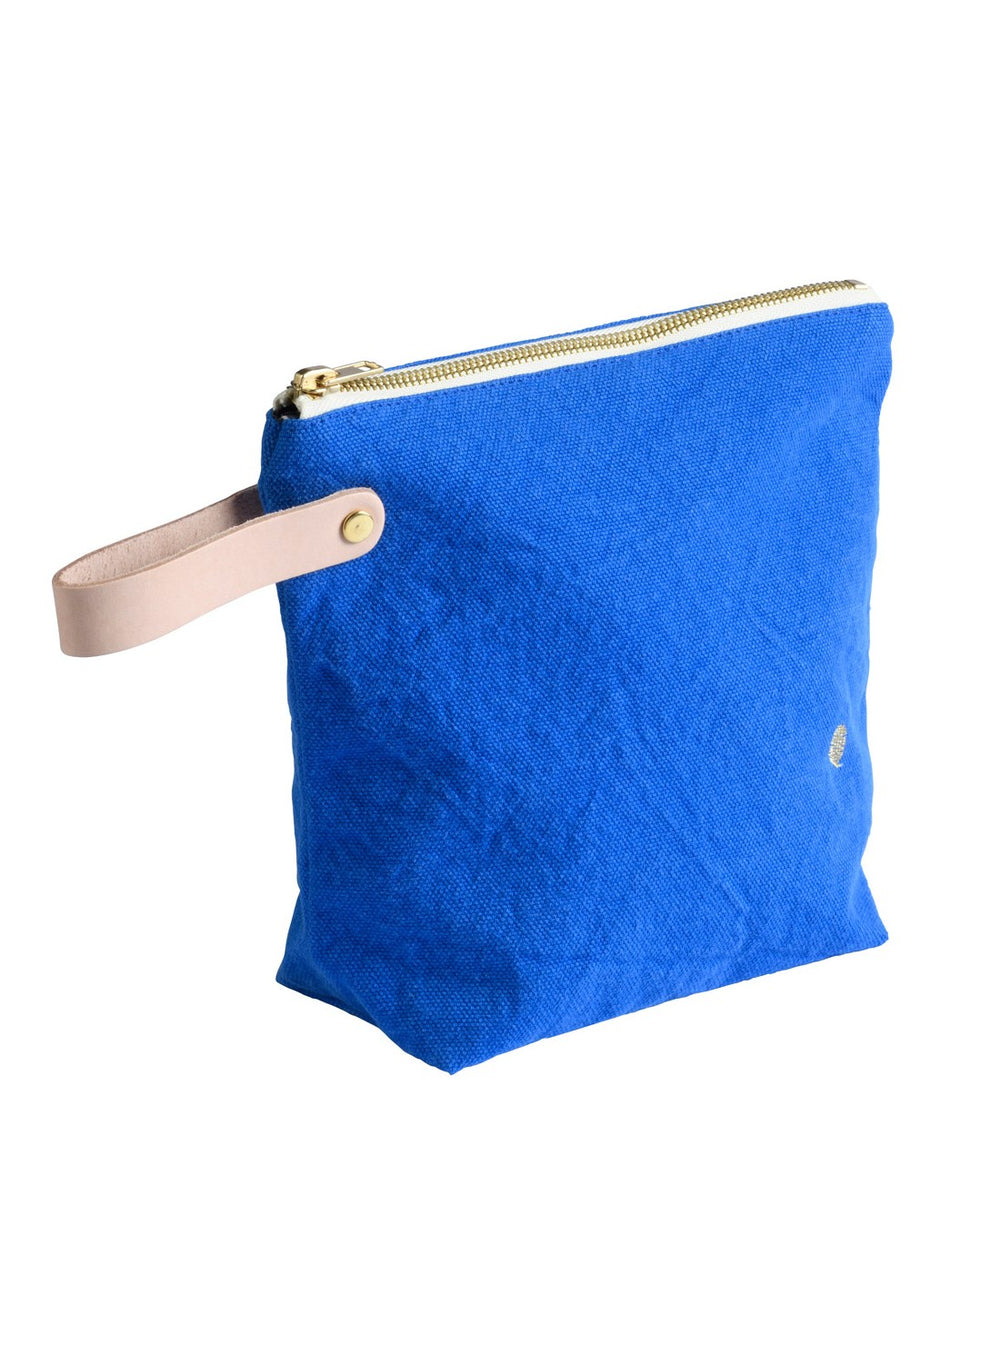 IONA Bleu Mecano Toiletry Bag